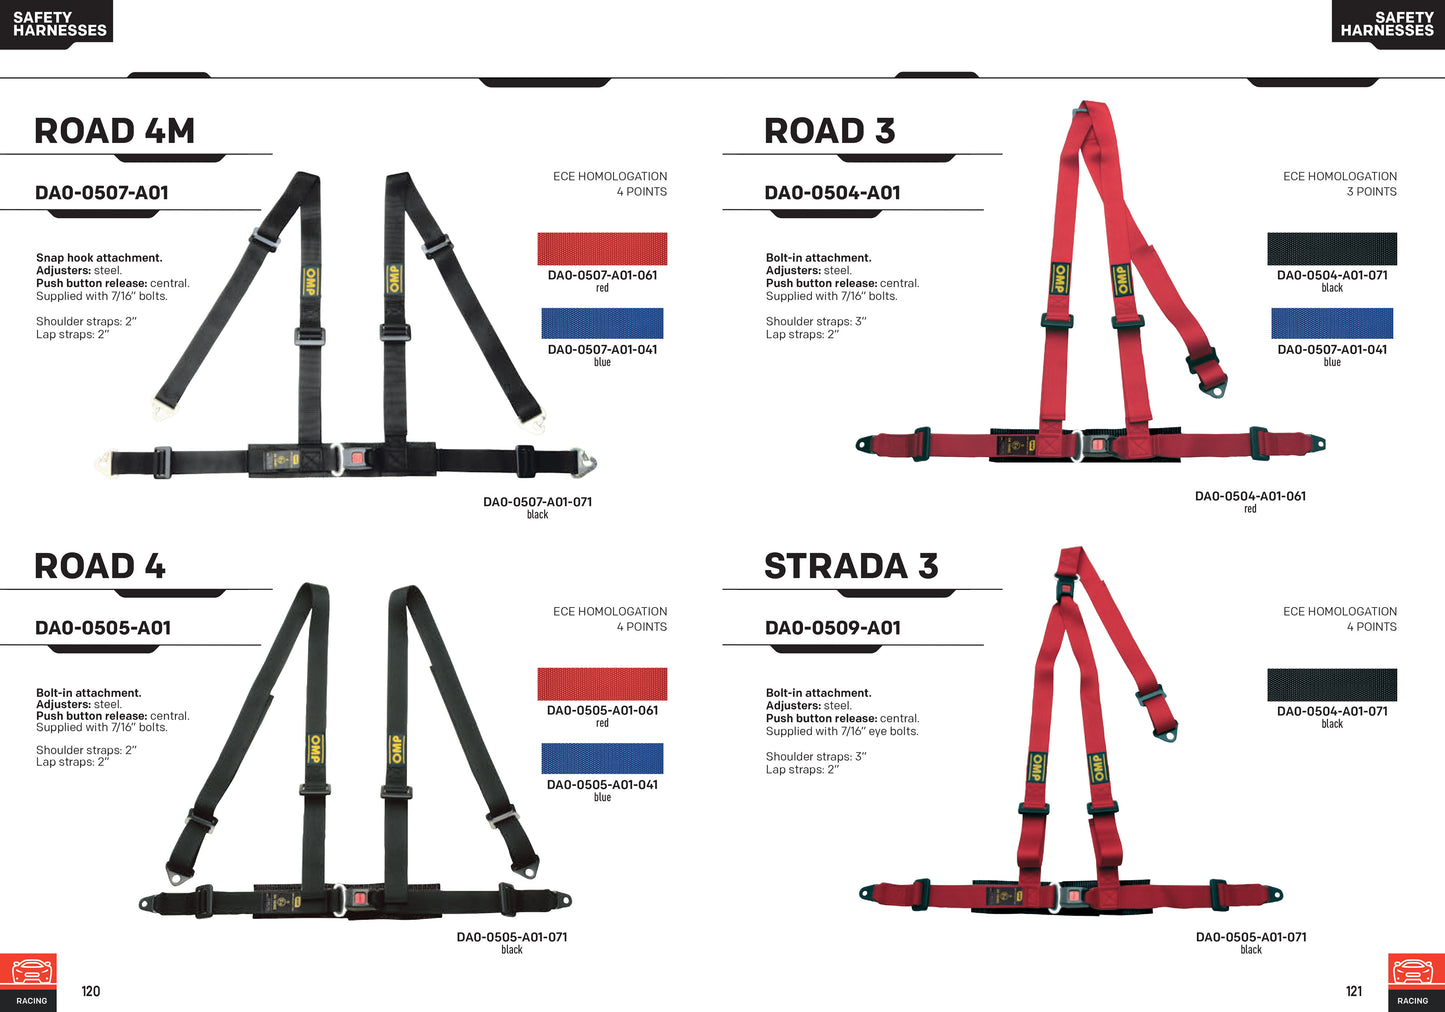 DA509 OMP 'STRADA 3' ROAD HARNESS 3-POINT 2" STRAPS BOLT-IN - RED or BLACK